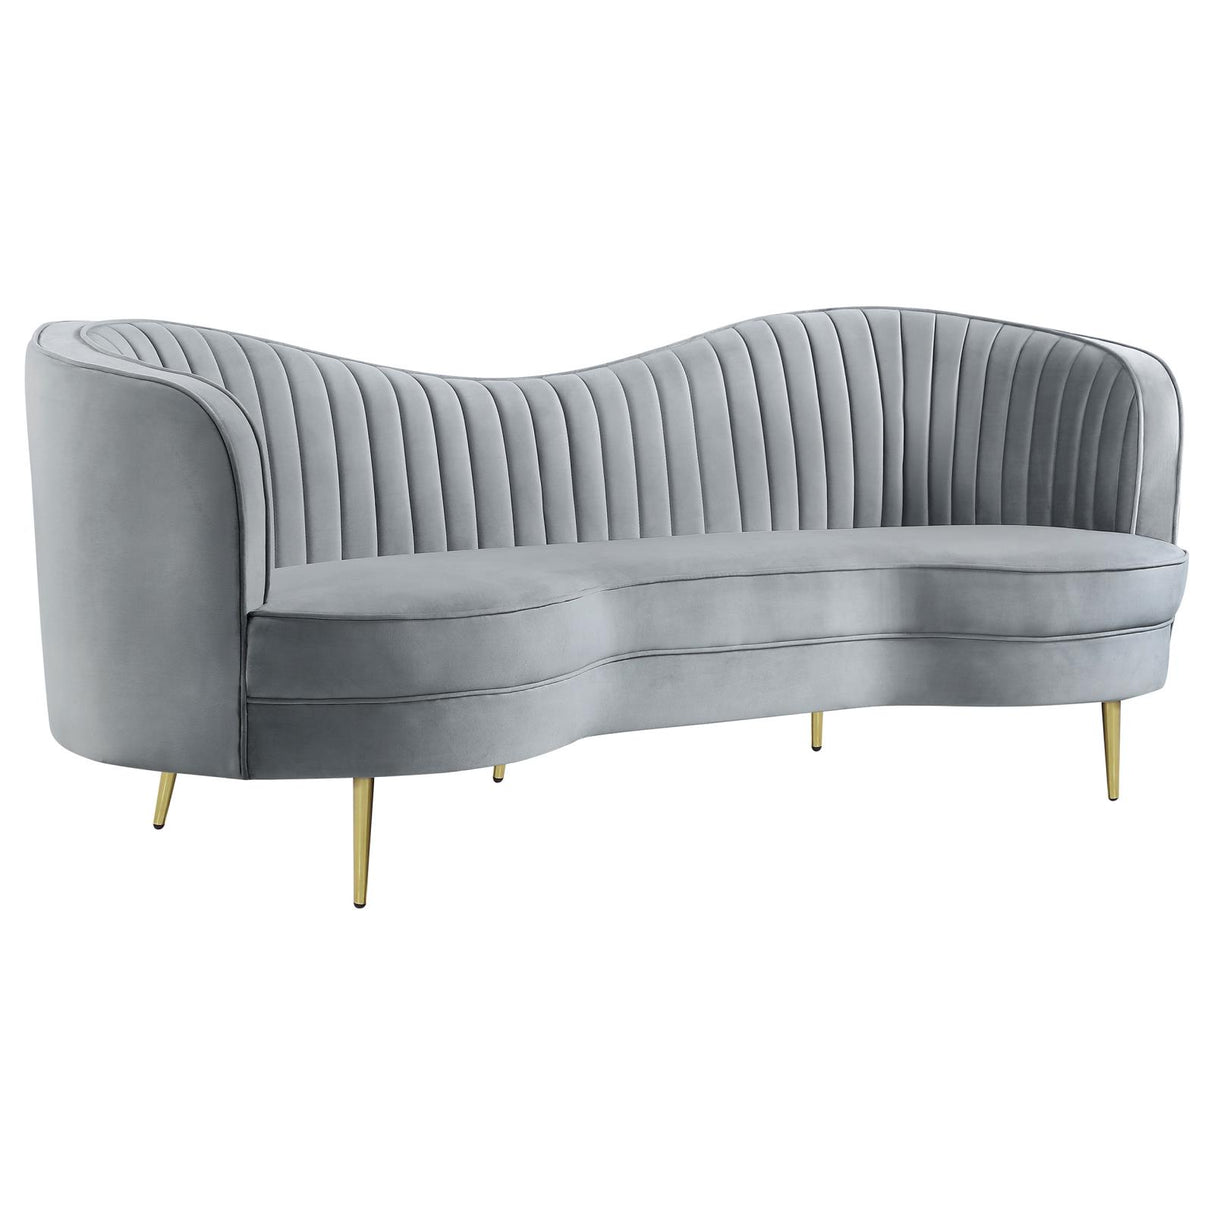 Sophia 2-piece Upholstered Living Room Set with Camel Back Grey and Gold - 506864-S2 - Luna Furniture